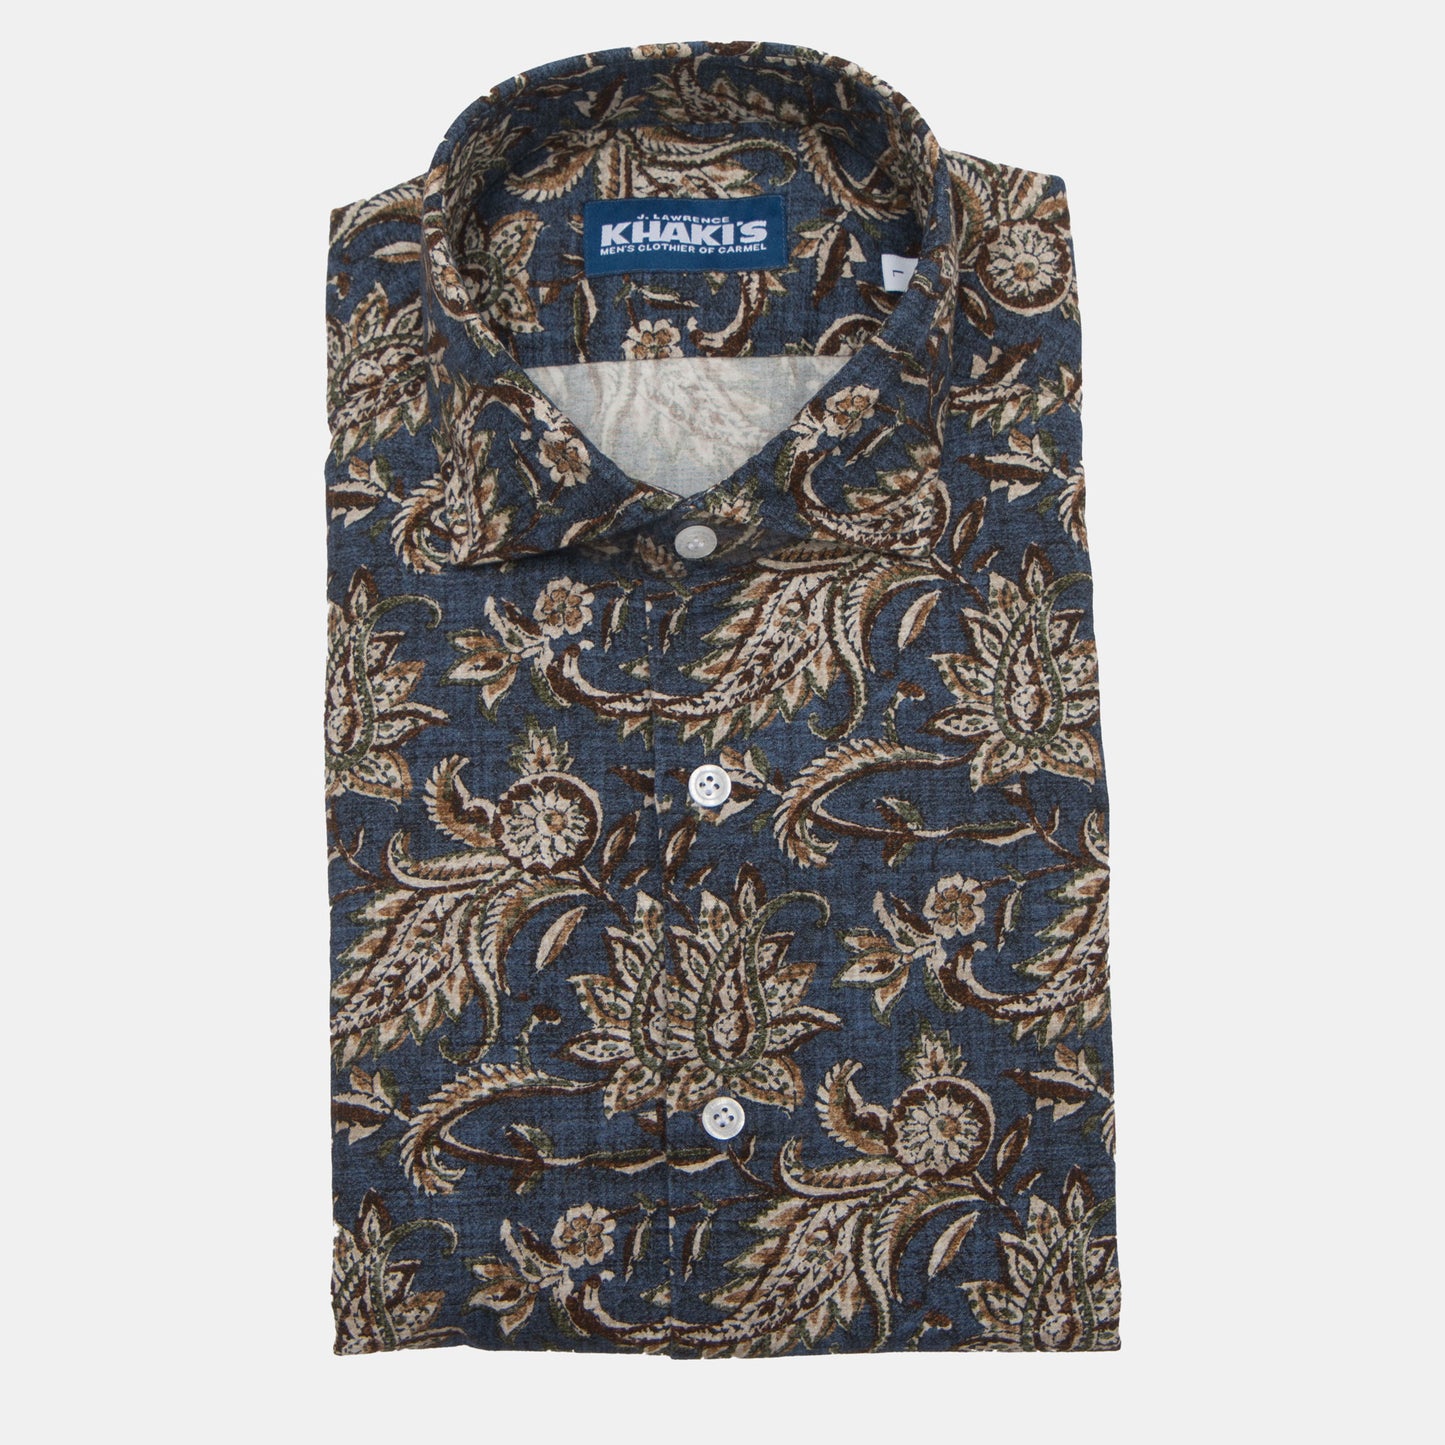 Khaki’s of Carmel - Navy Paisley Shirt